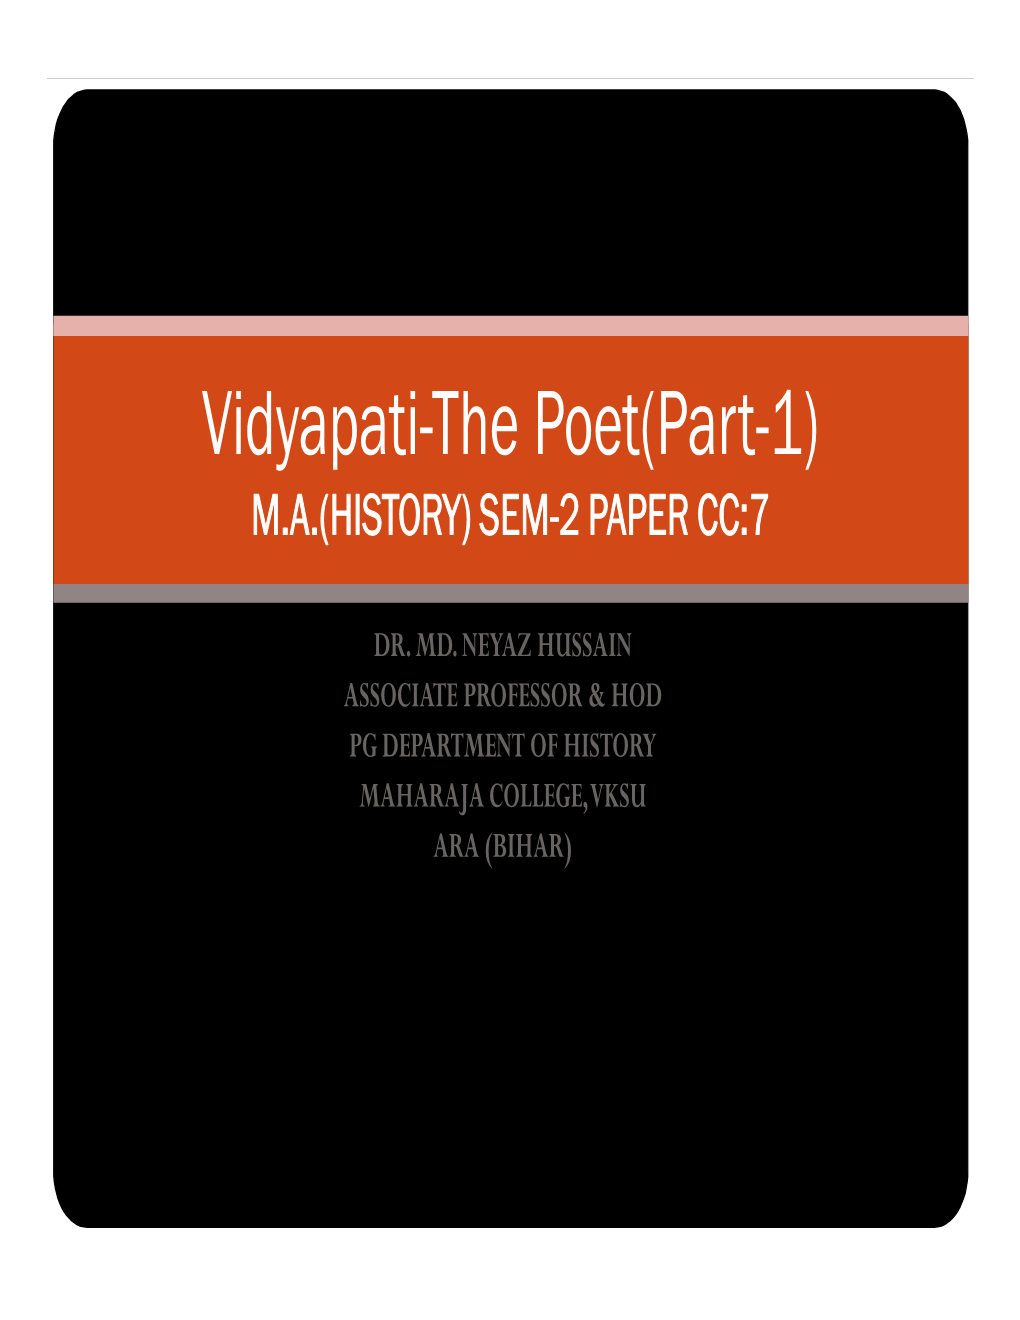 Vidyapati-The Poet(Part-1) M.A.(HISTORY) SEM-2 PAPER CC:7